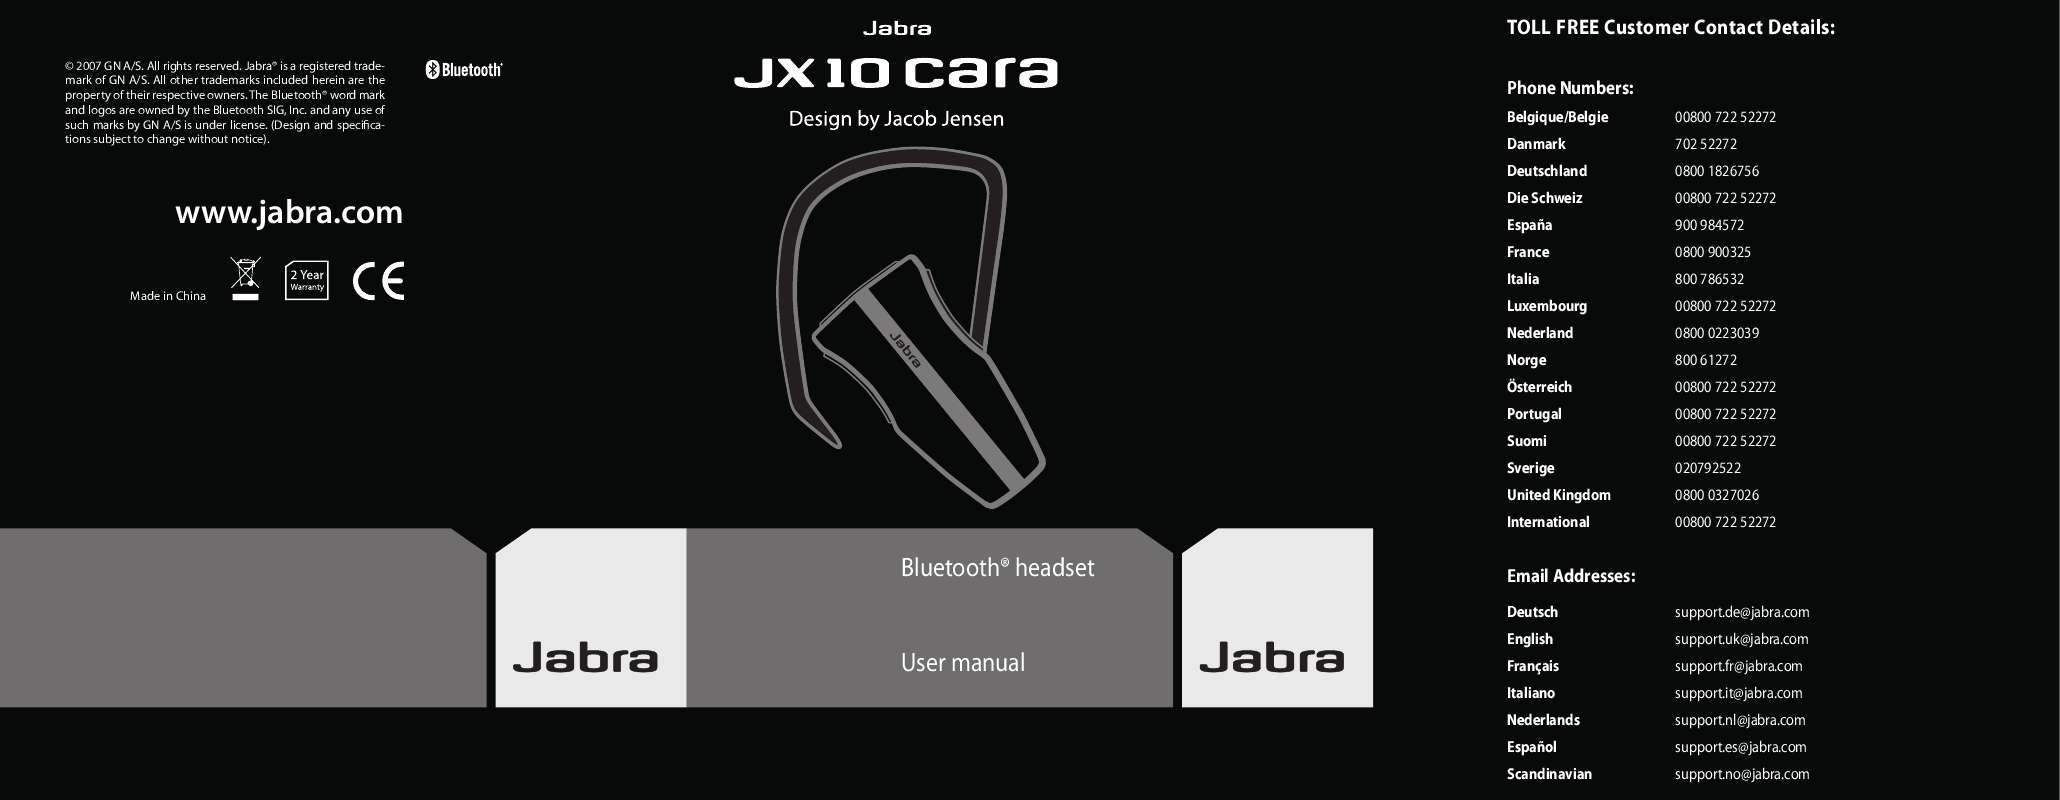 Guide utilisation JABRA JX10 CARA  de la marque JABRA